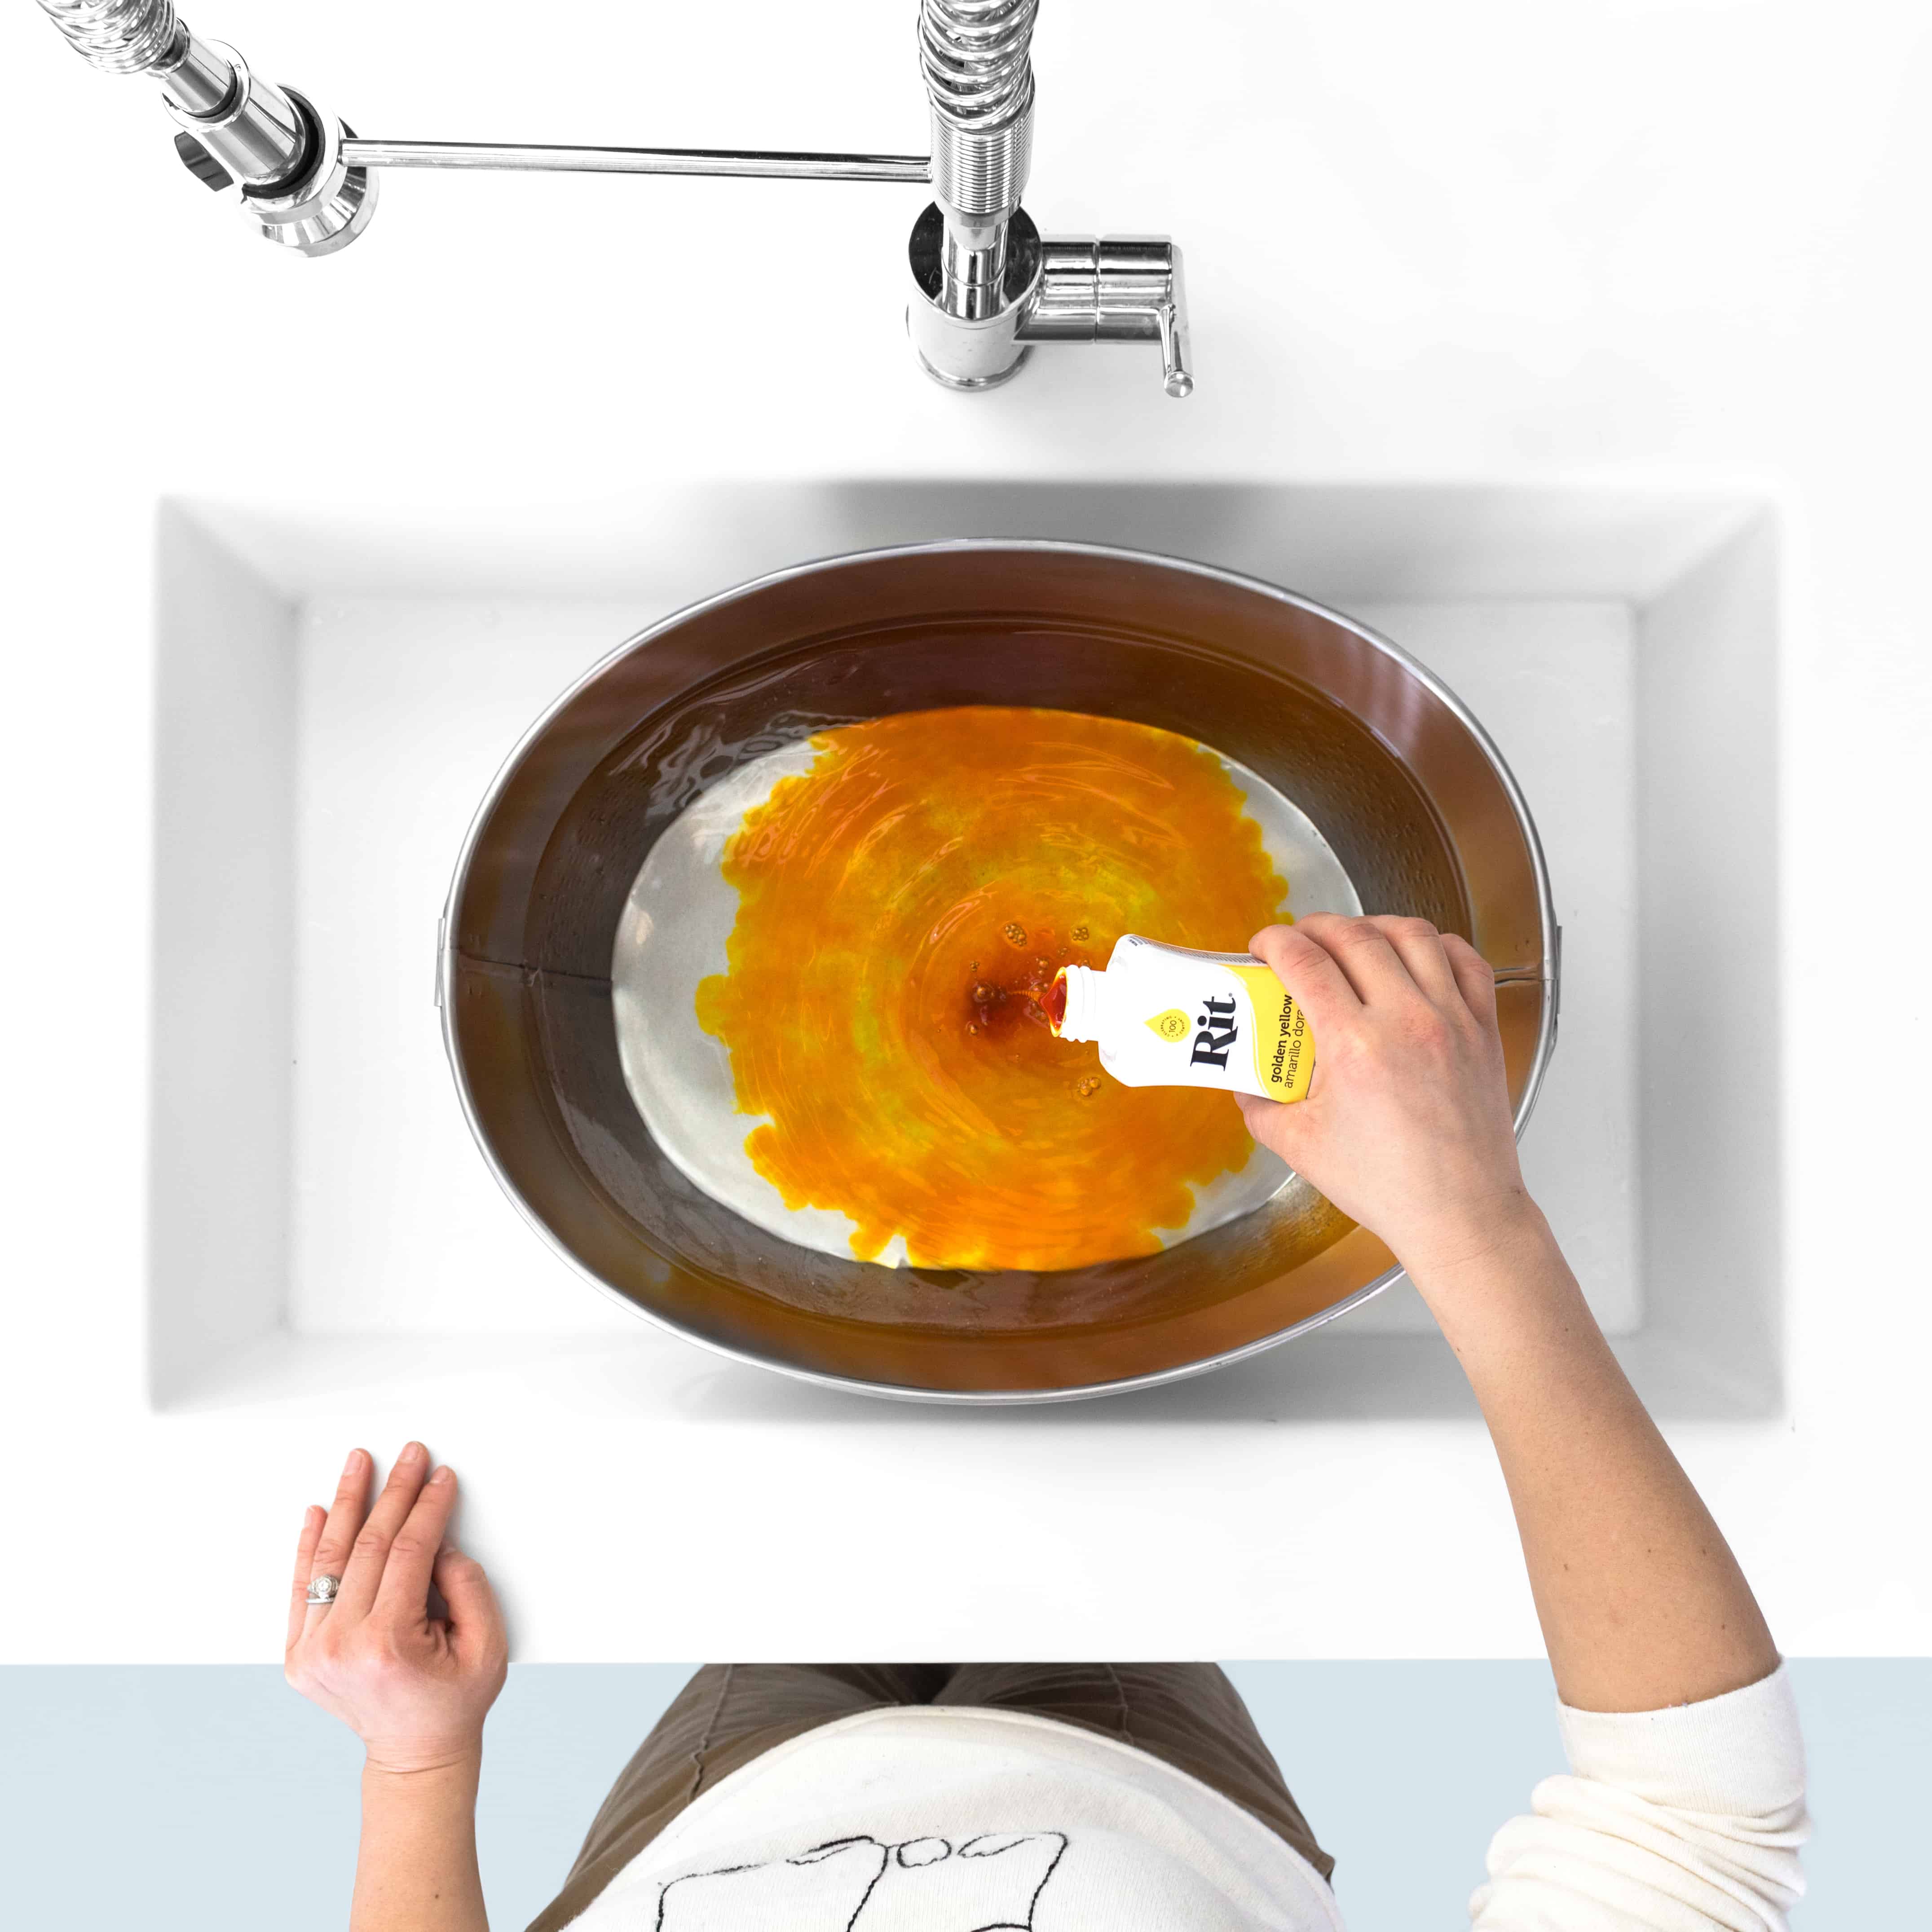 How to Dye Using the Sink or Bucket Method